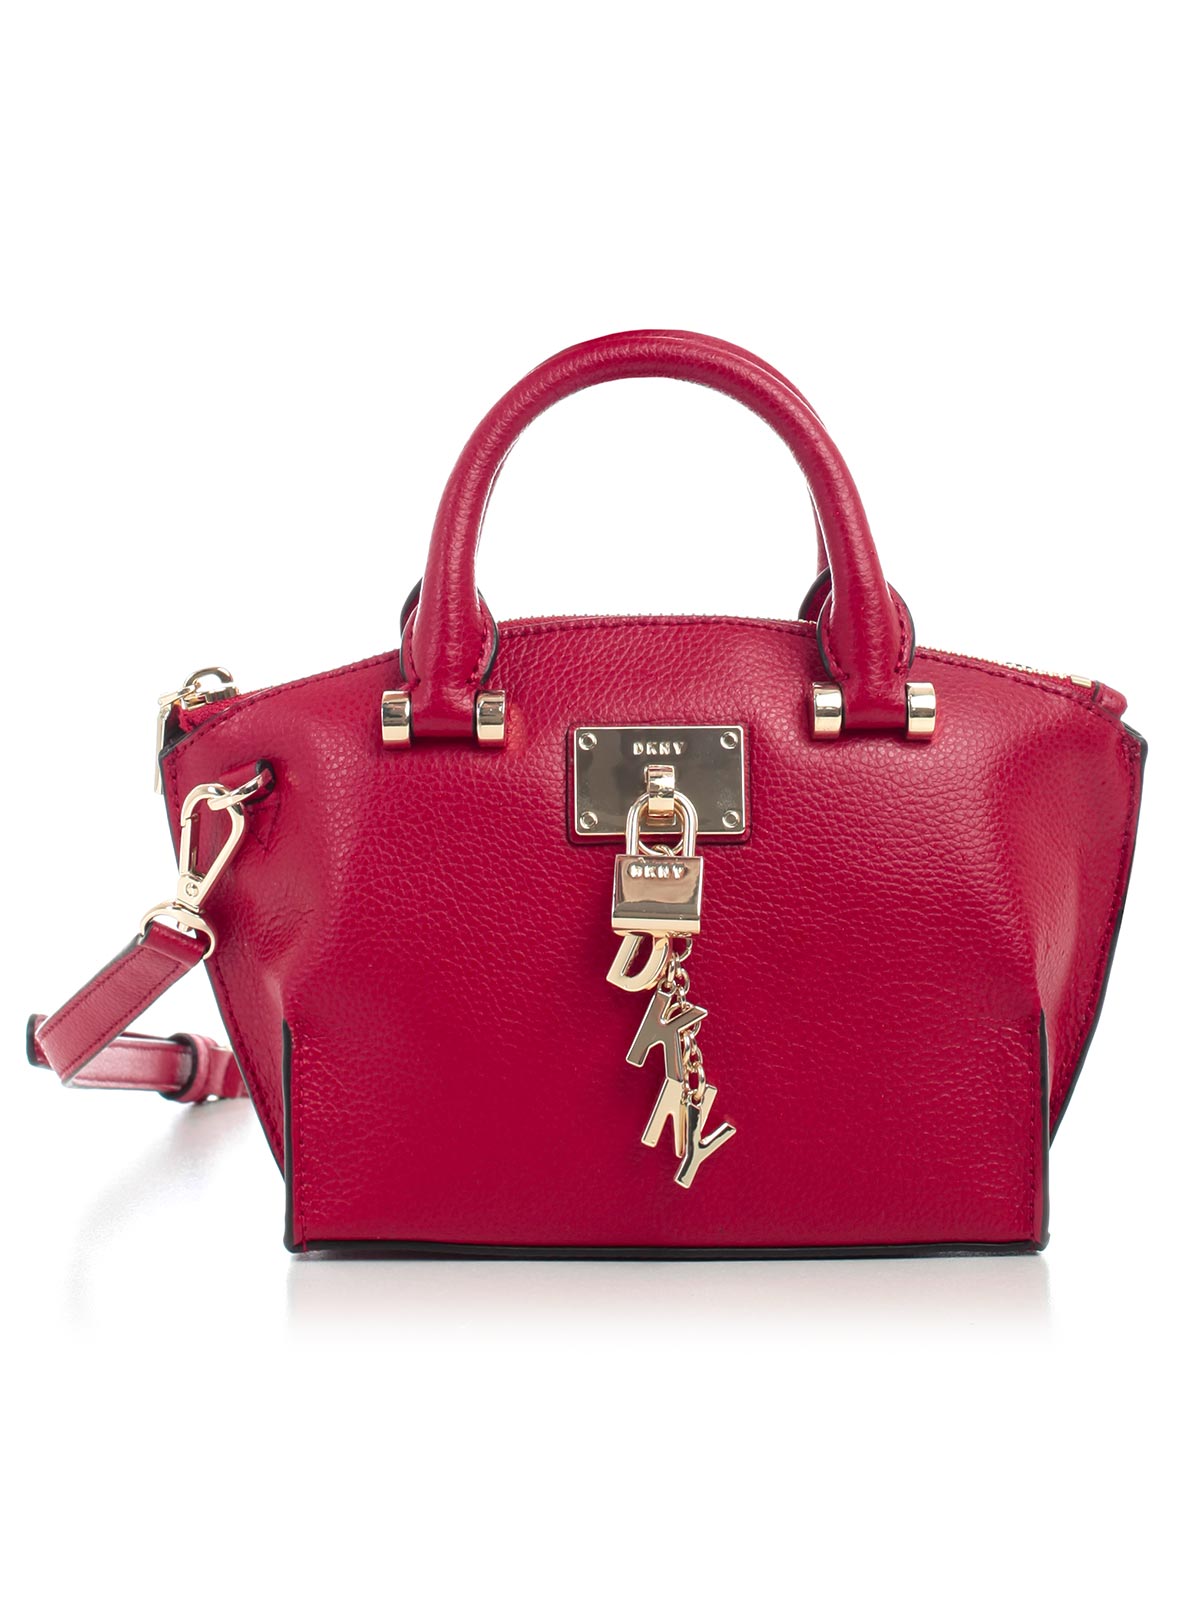 dkny purse red